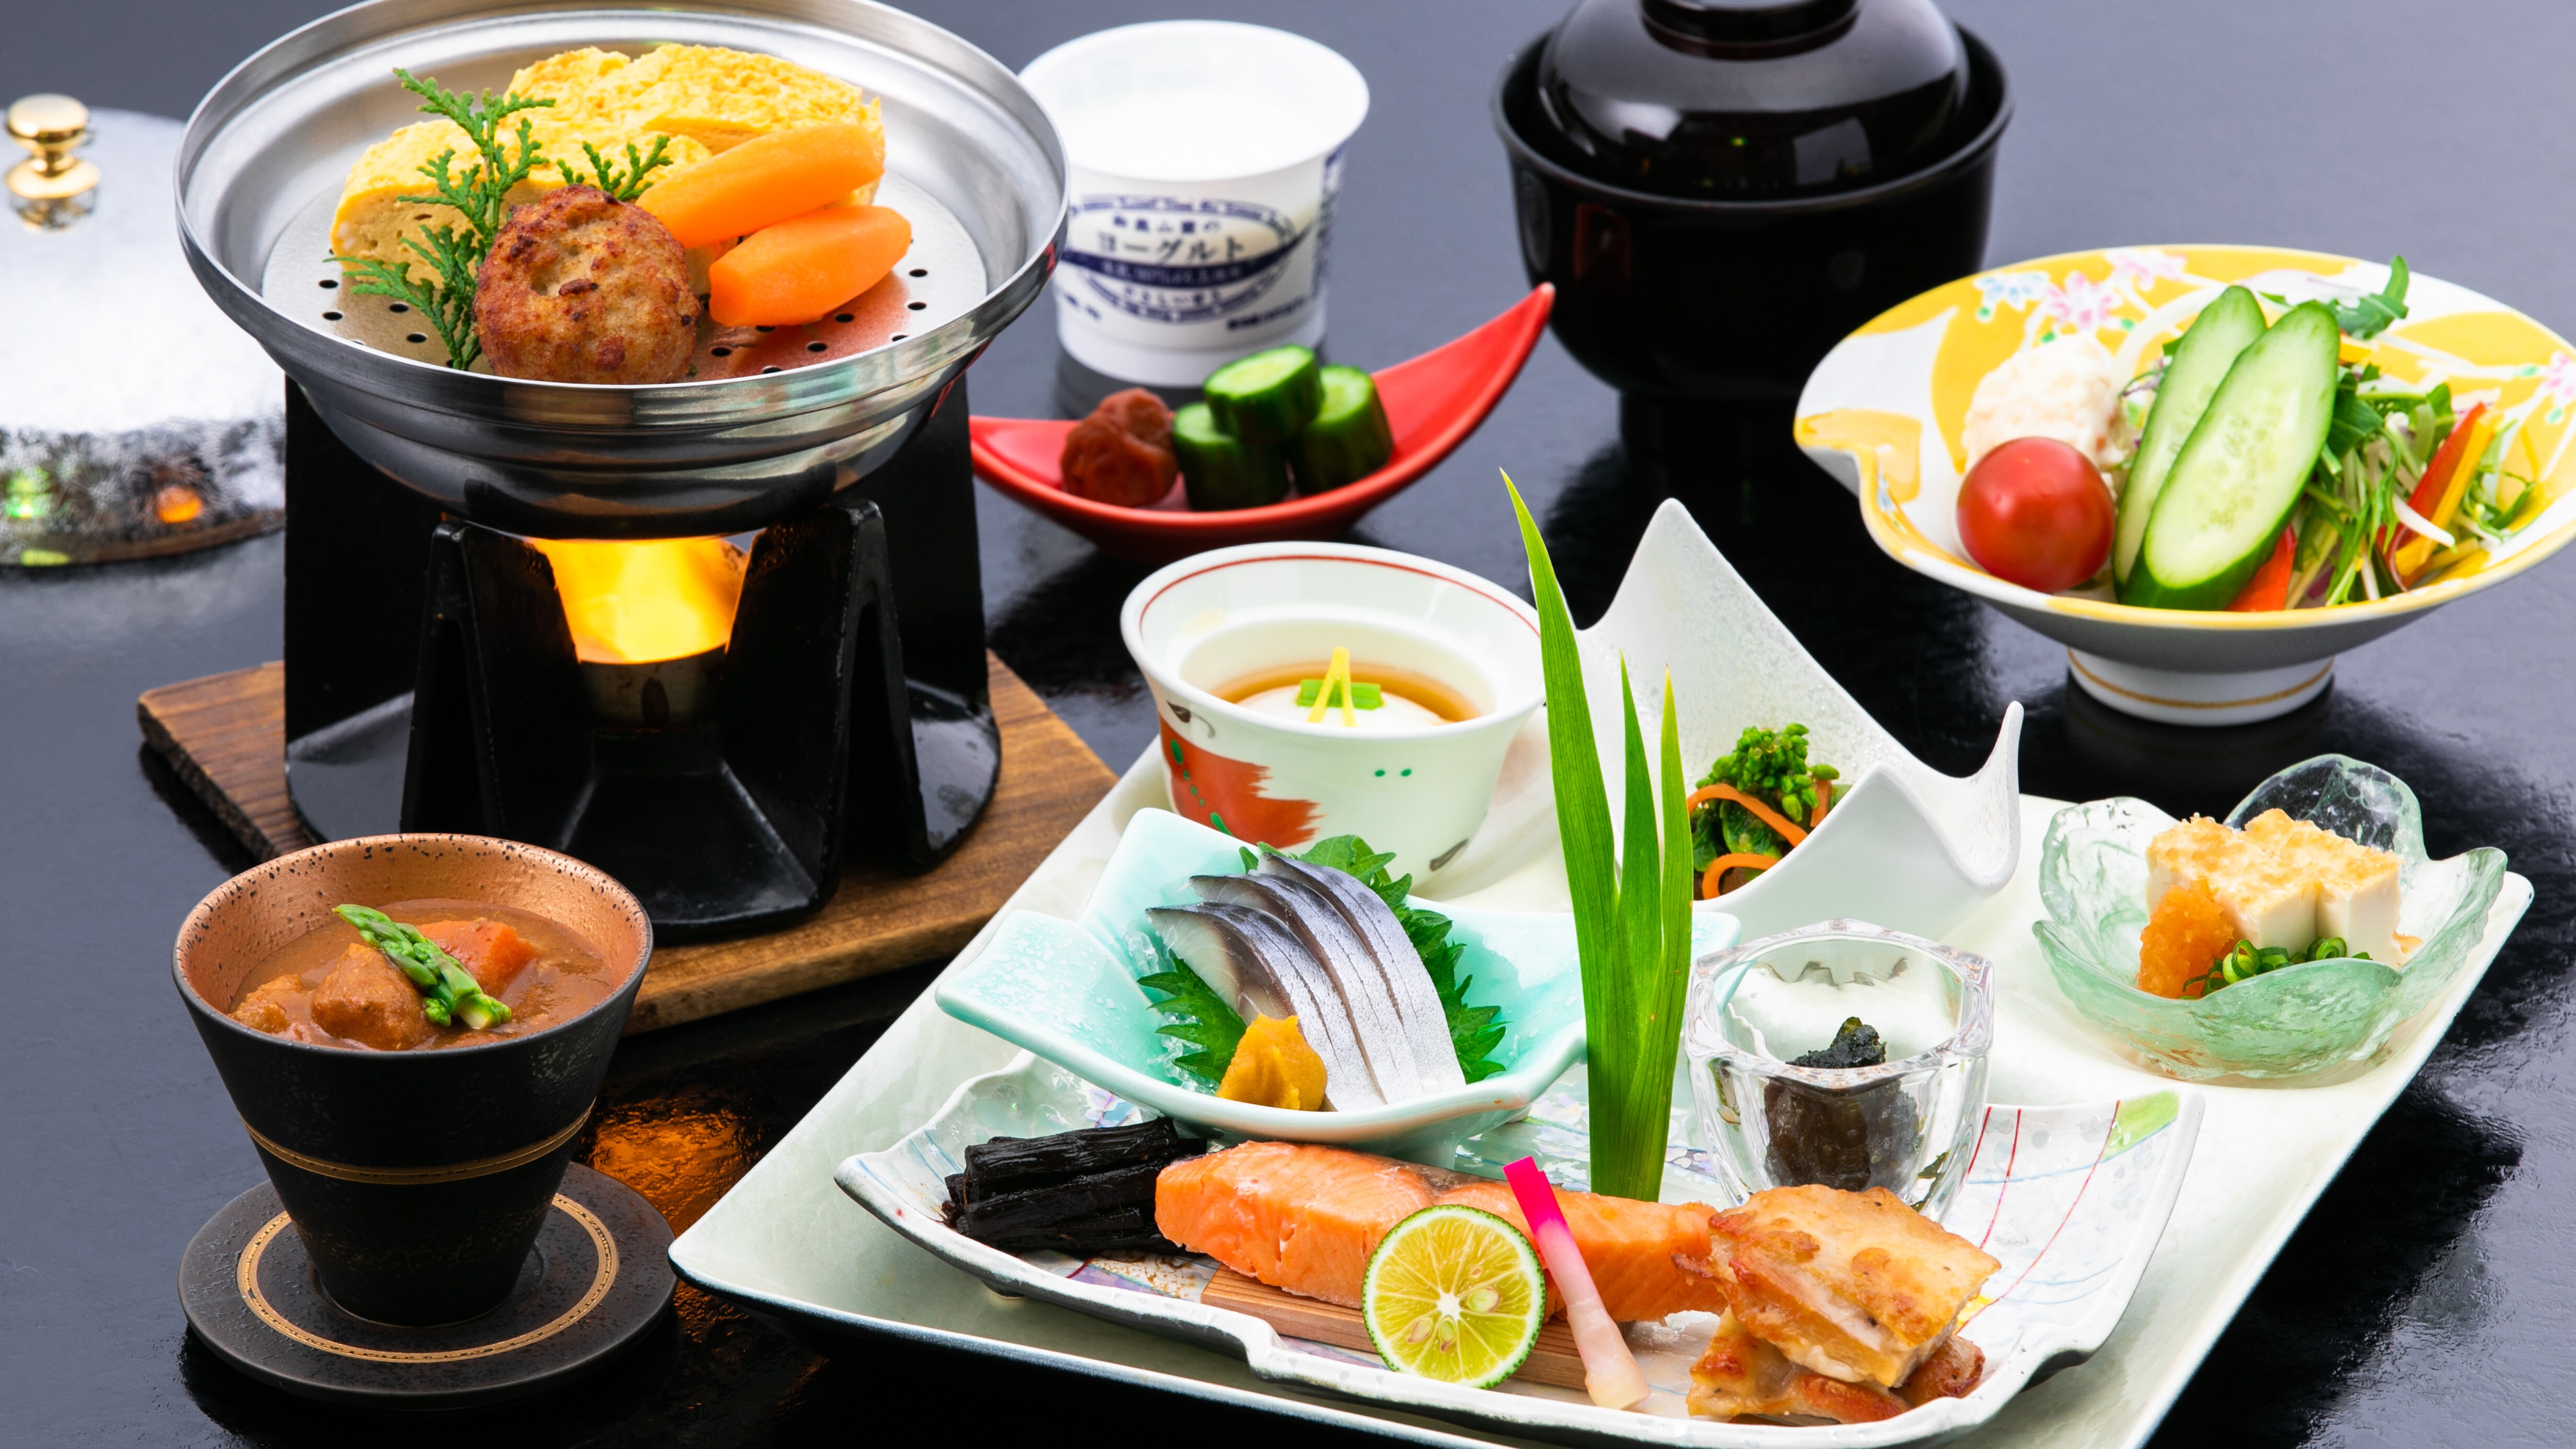 Breakfast Japanese set meal image